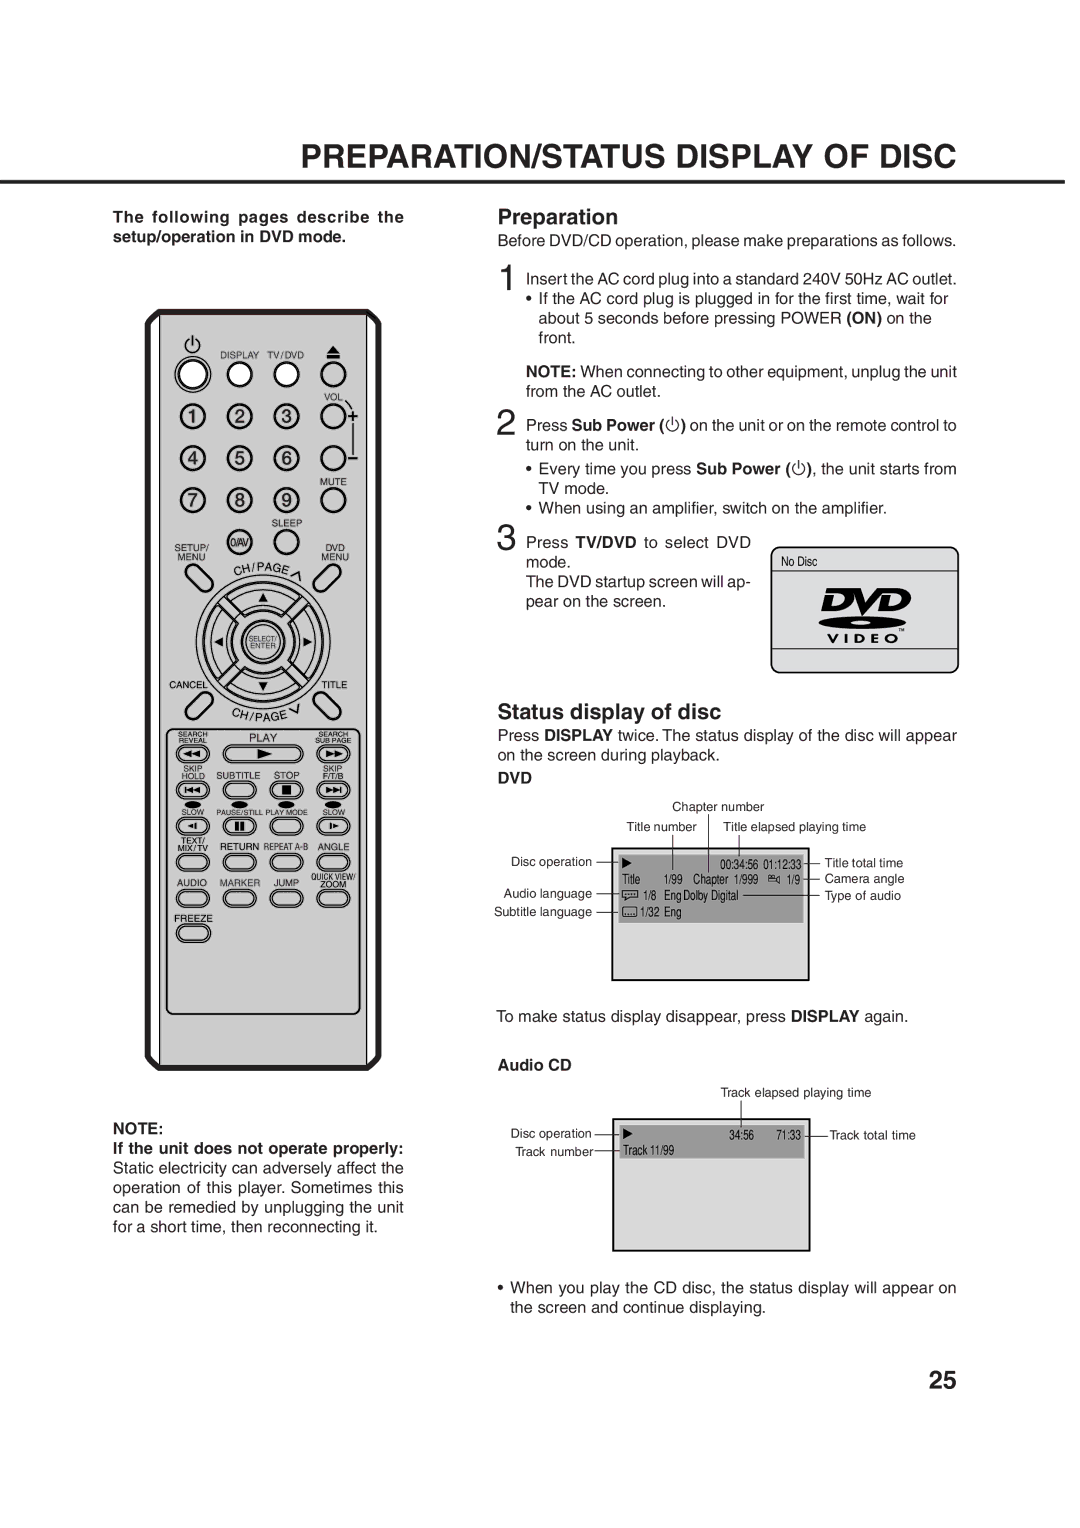 Orion 14LD manual PREPARATION/STATUS Display of Disc, Preparation, Status display of disc, Dvd 